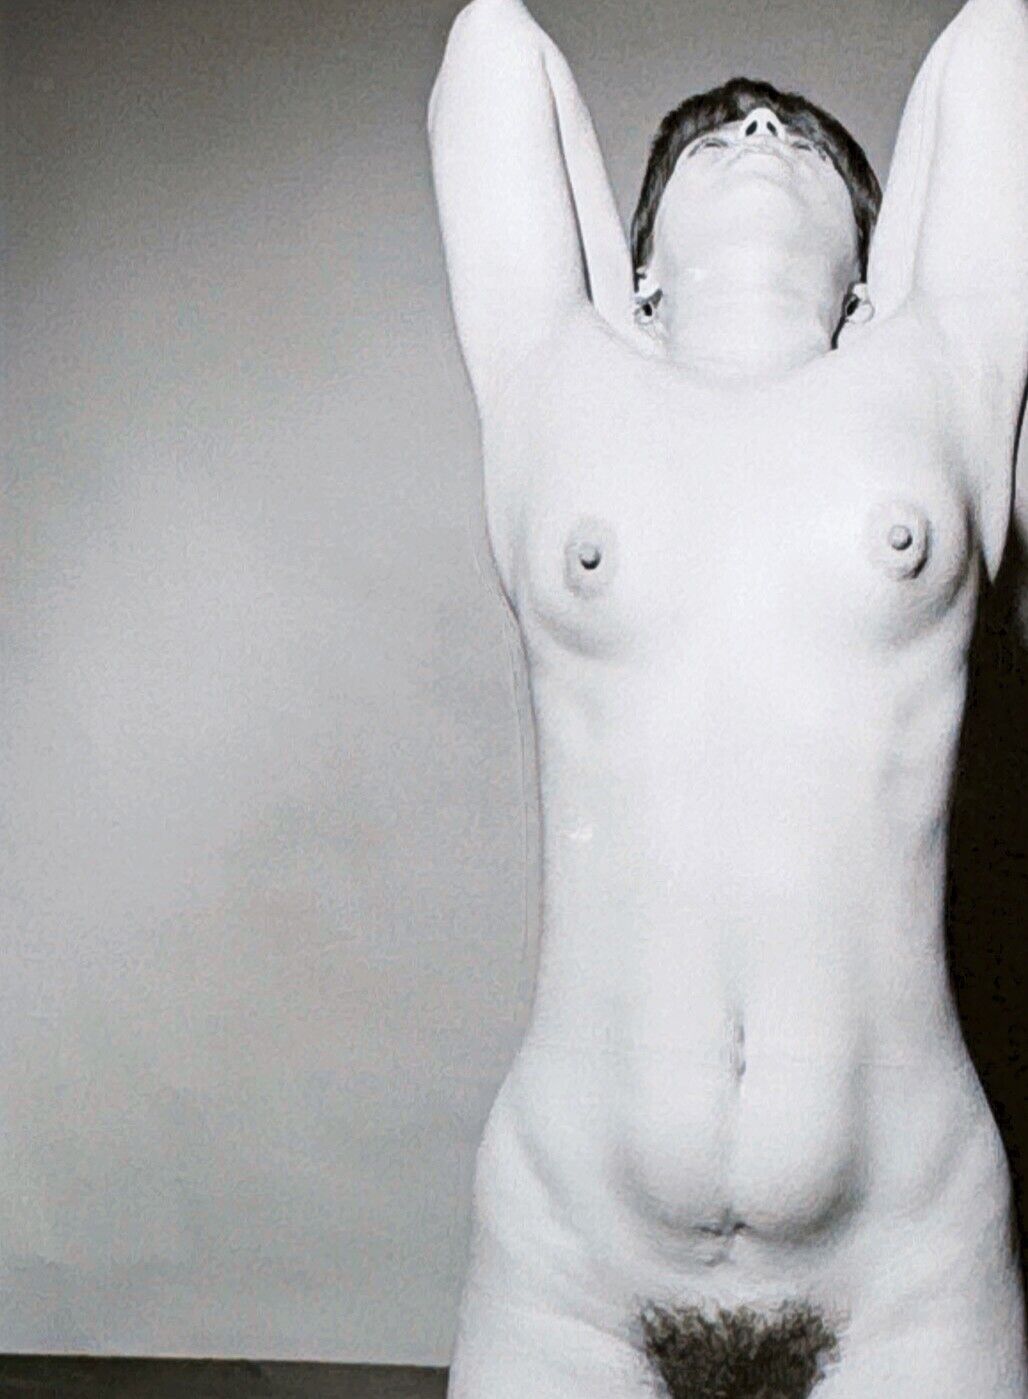 1960s Amateur Artistic Nude Model Large Format Negative